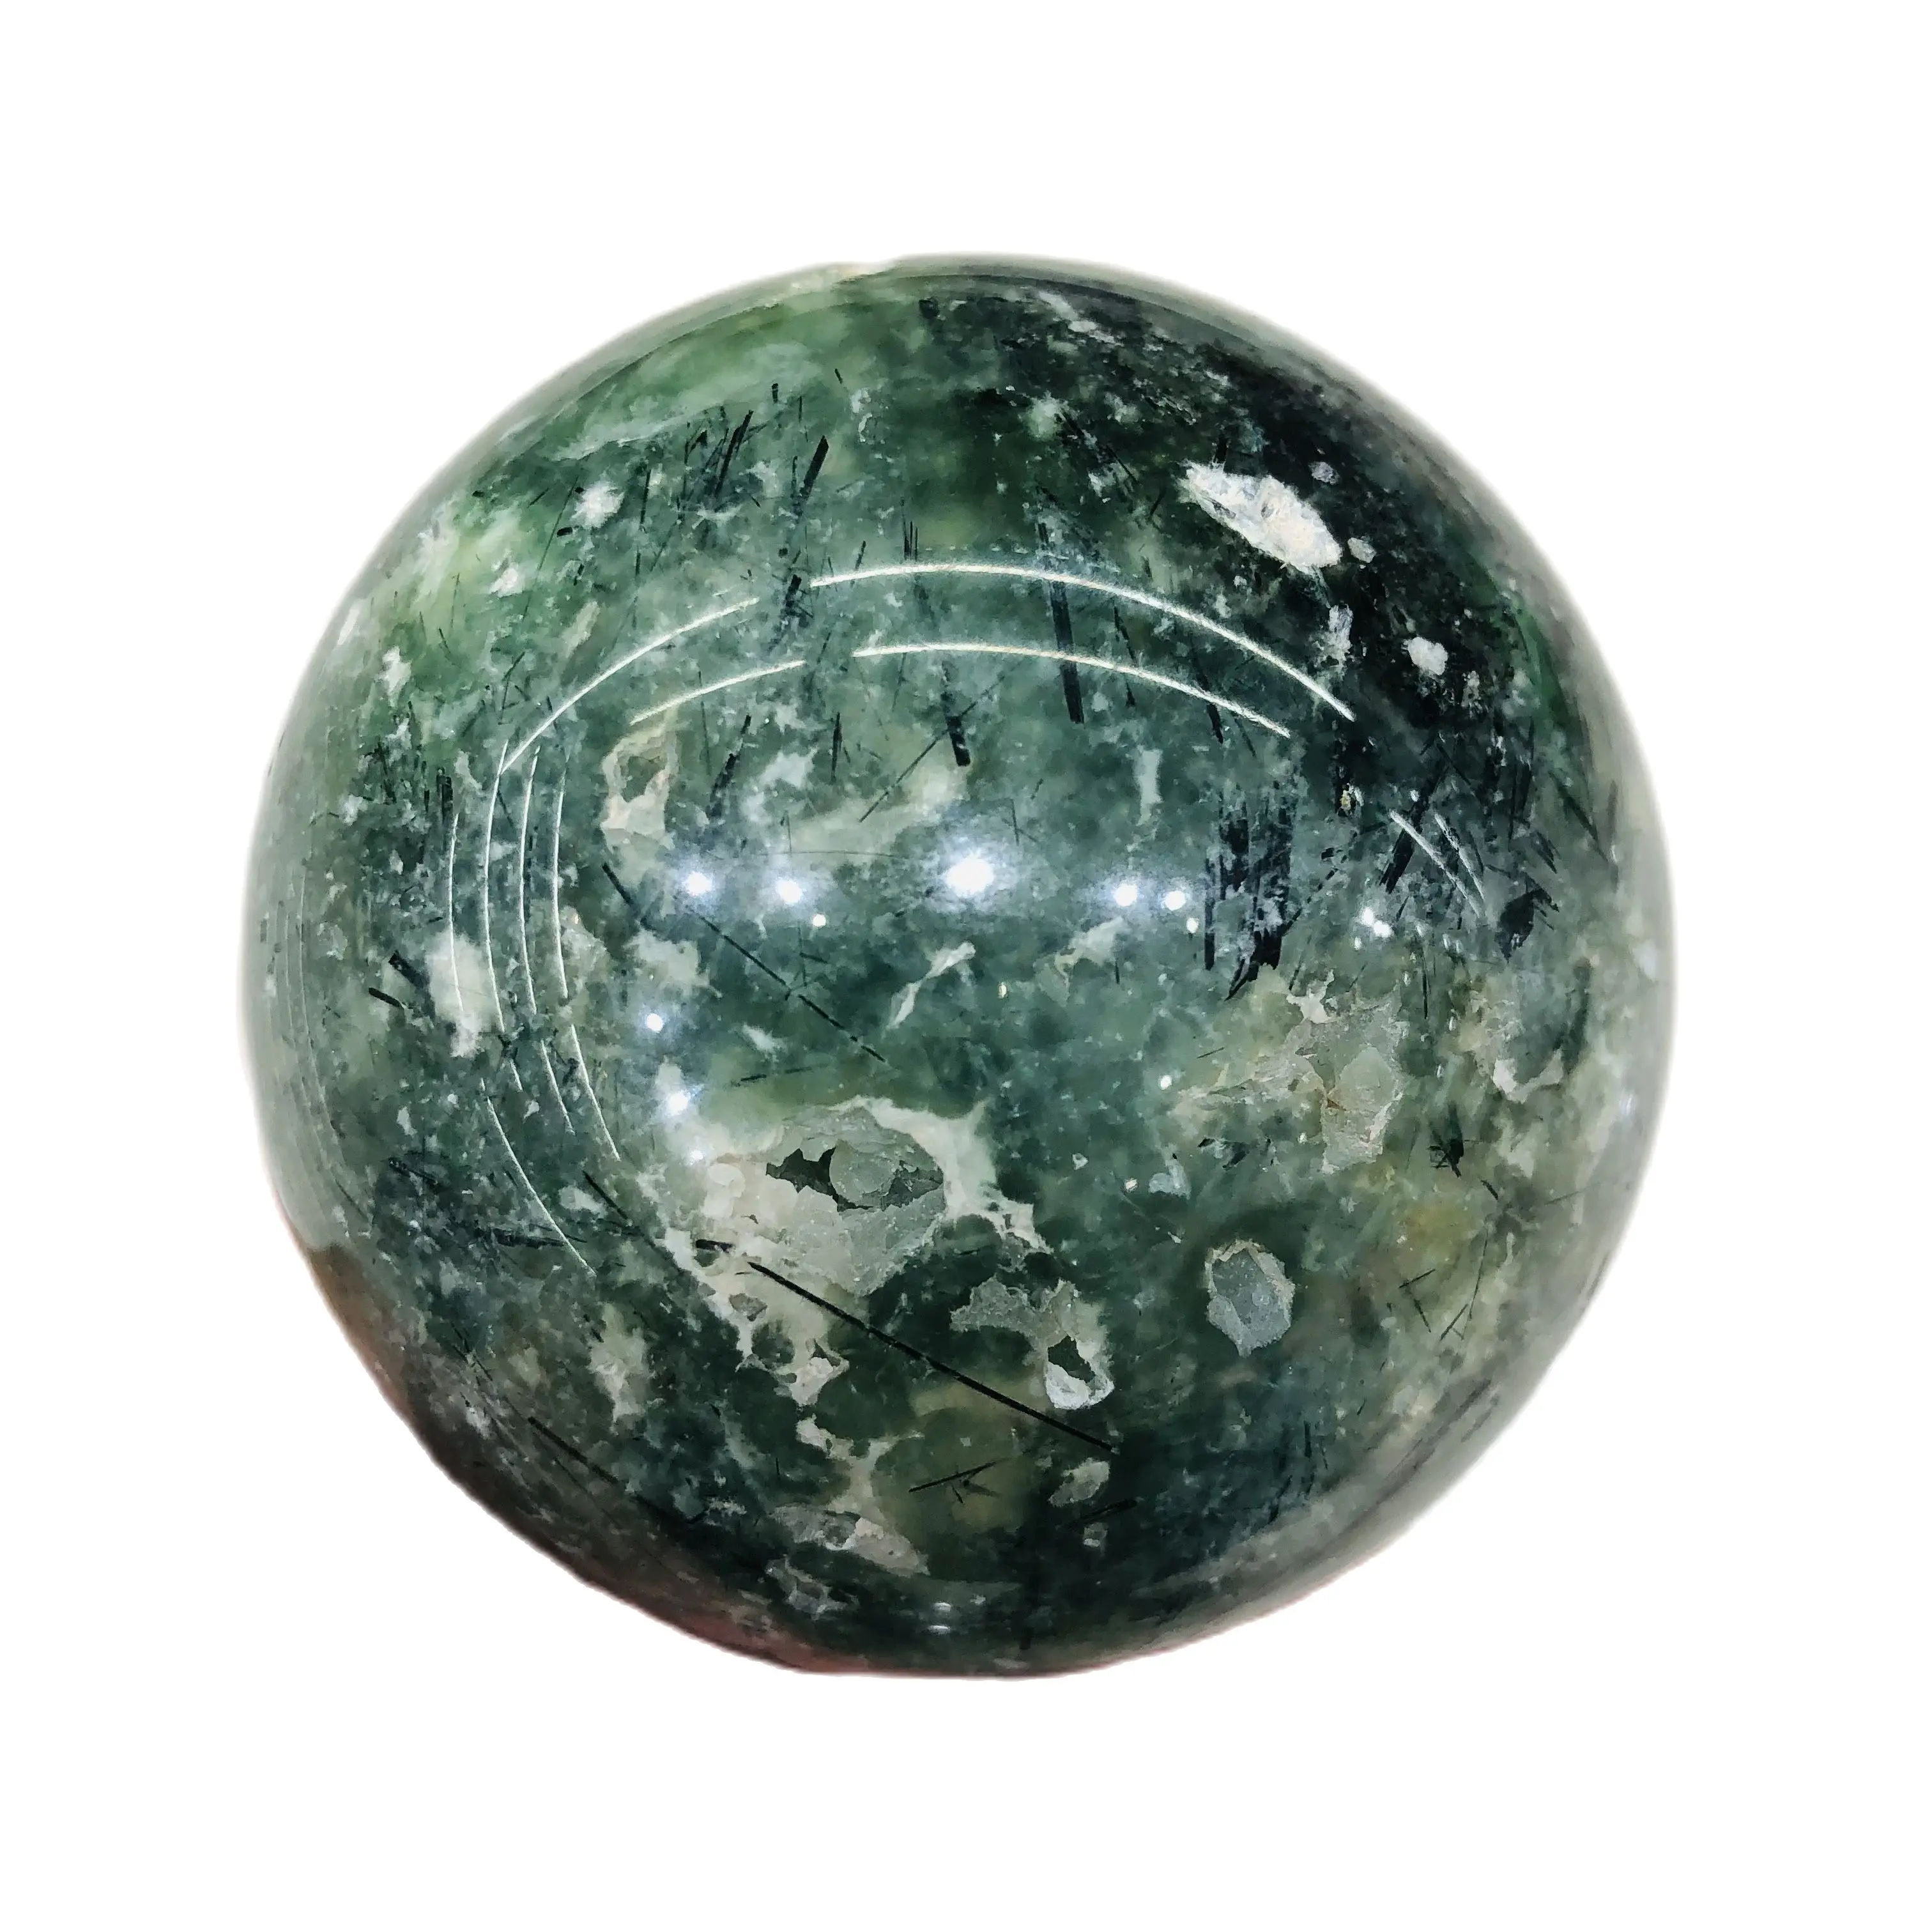 

Natural Crystals Quartz Grape Prehnite Sphere Energy Ball Reiki Stones Room Home Office Aquarium Decoration Accessories Gemstone